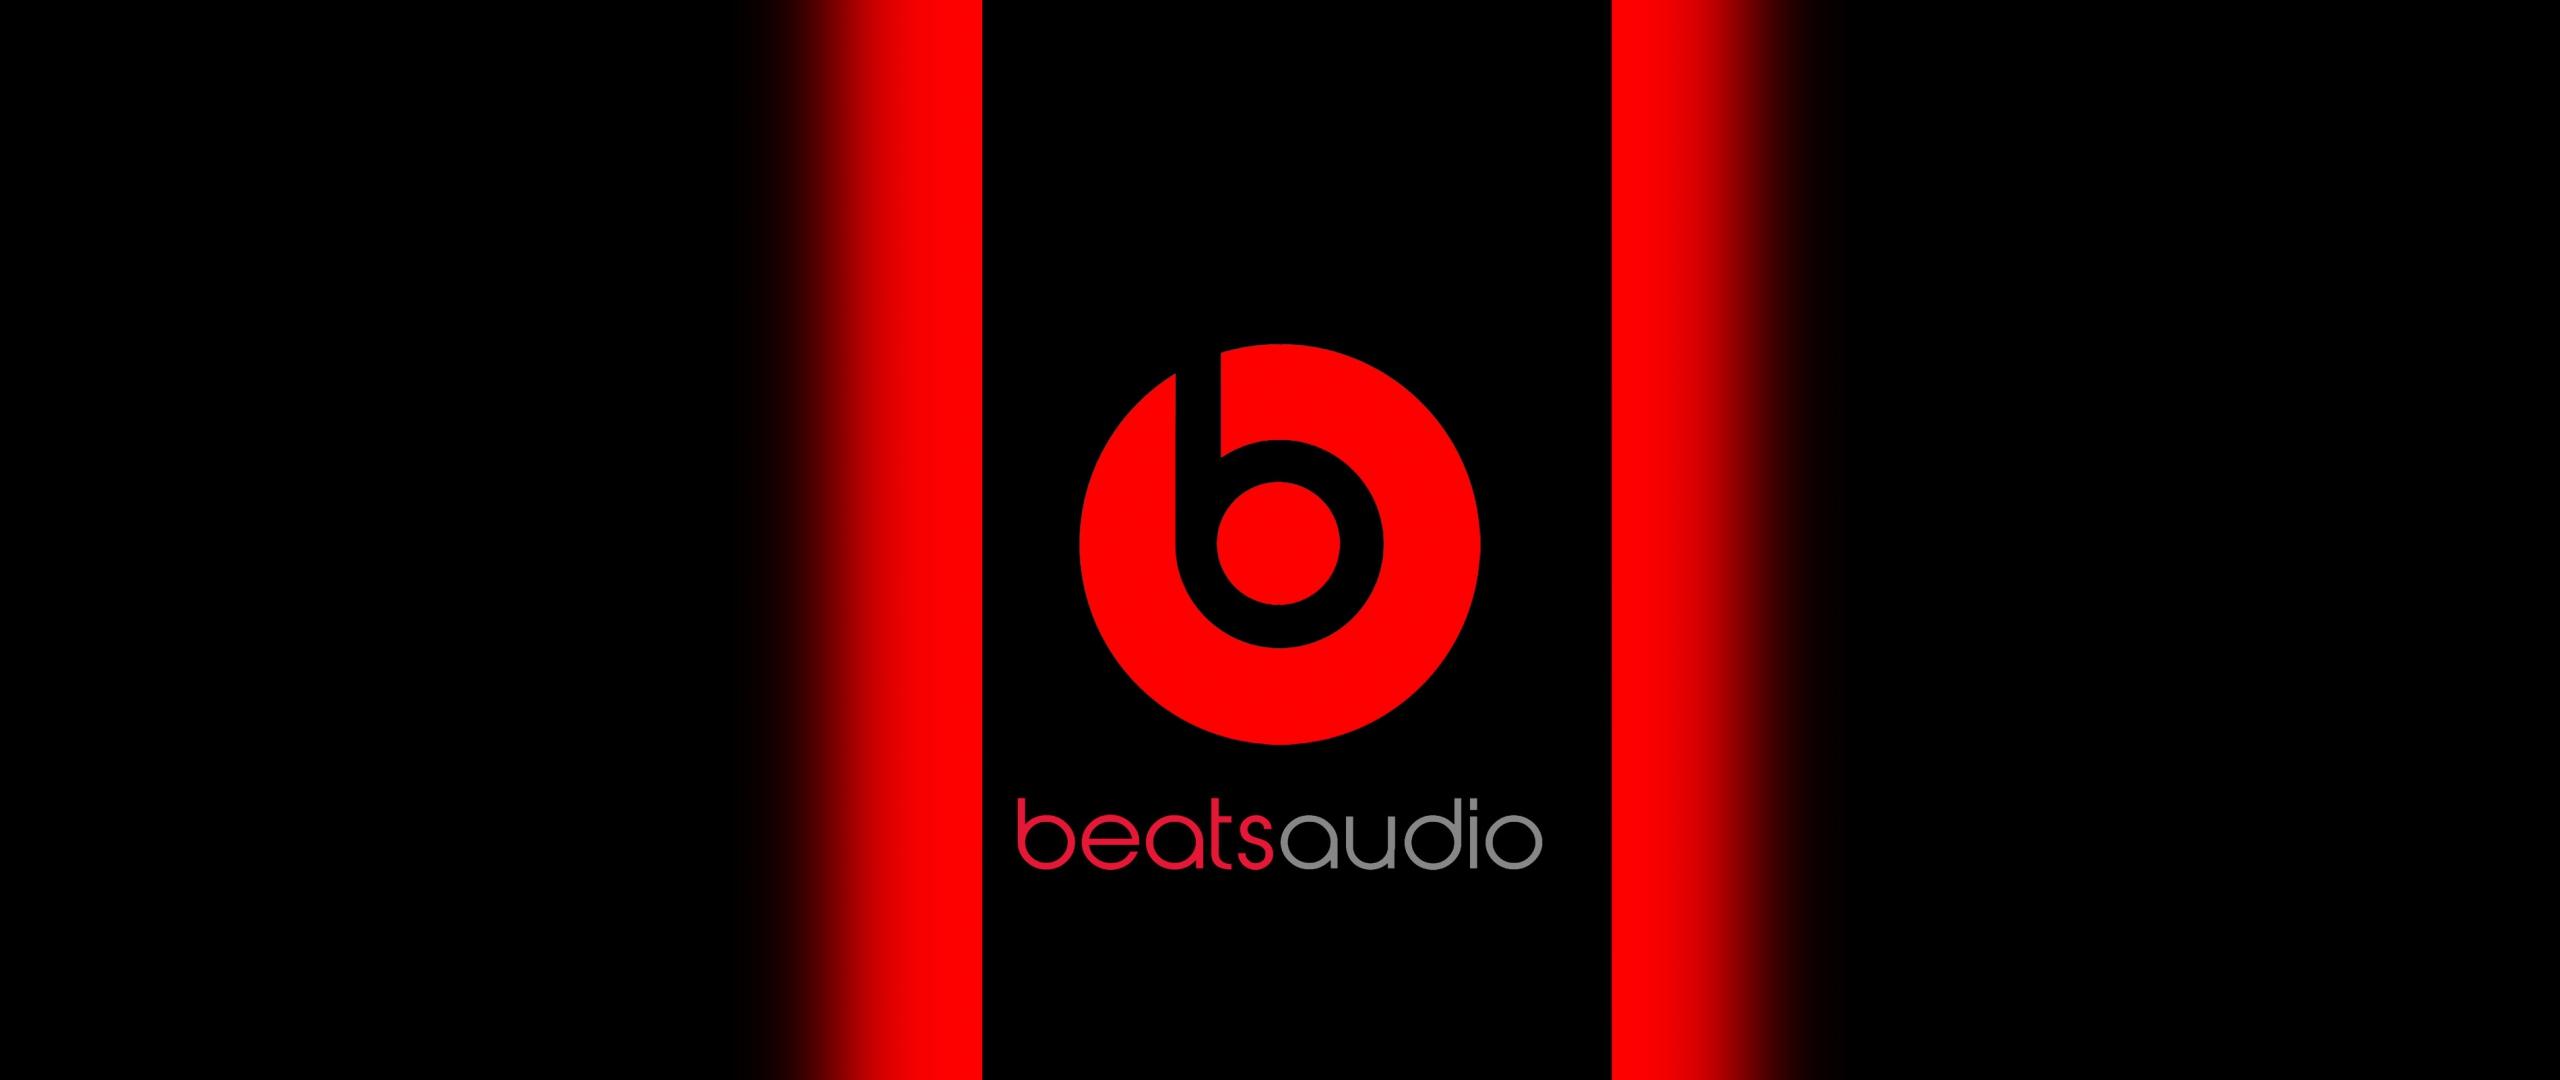 Red Beats Logo - HD Background Beats Audio Logo Red Black Symbol Wallpaper ...